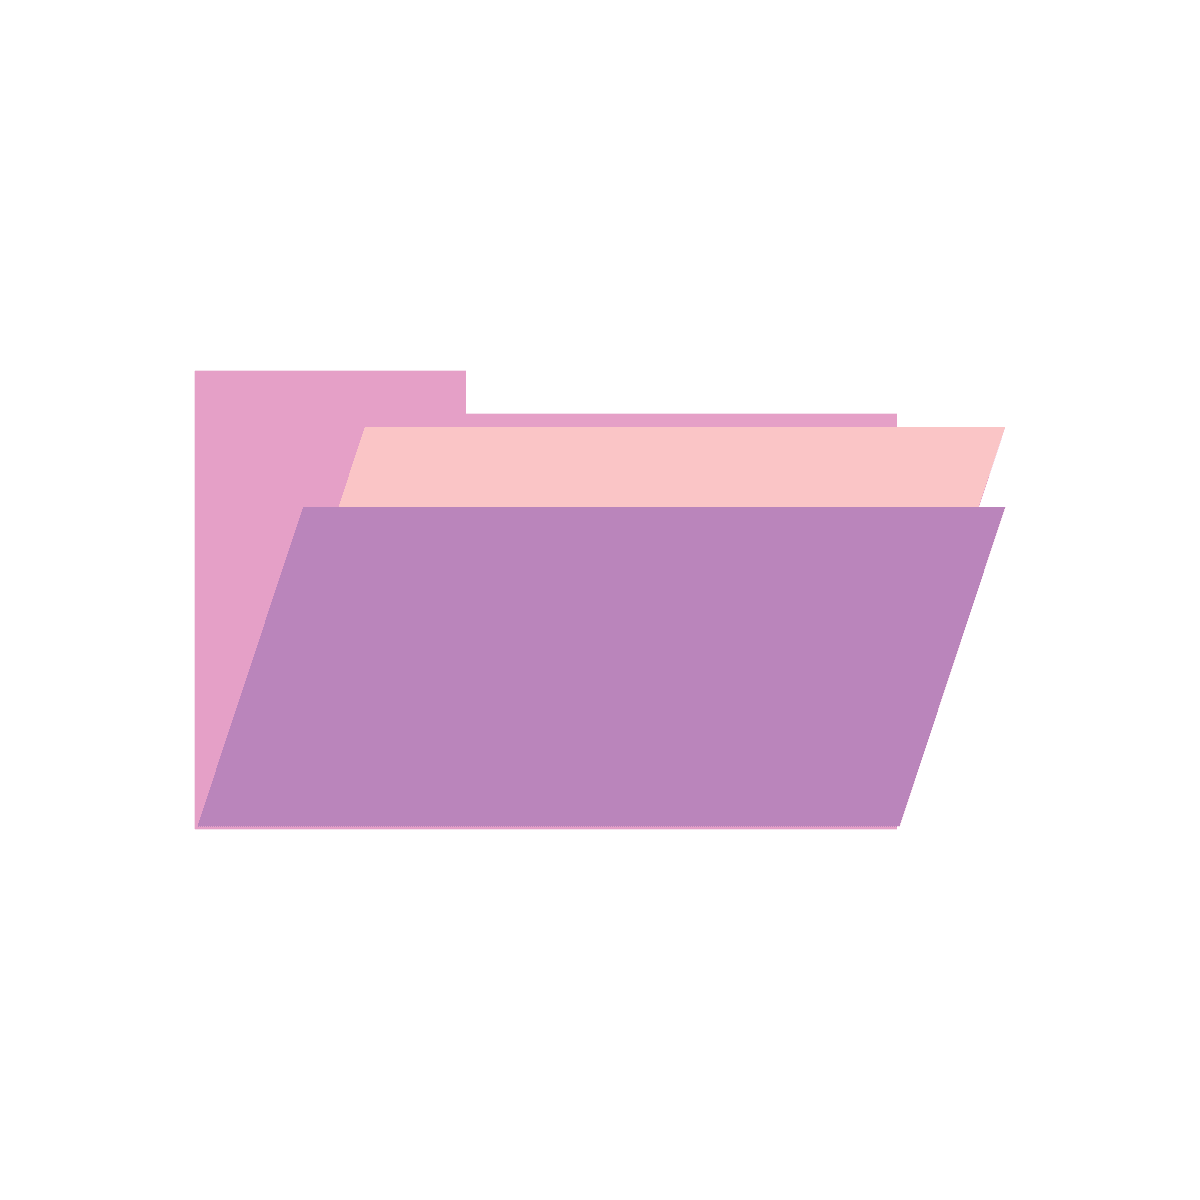 elegant document folder icon with monochrome style